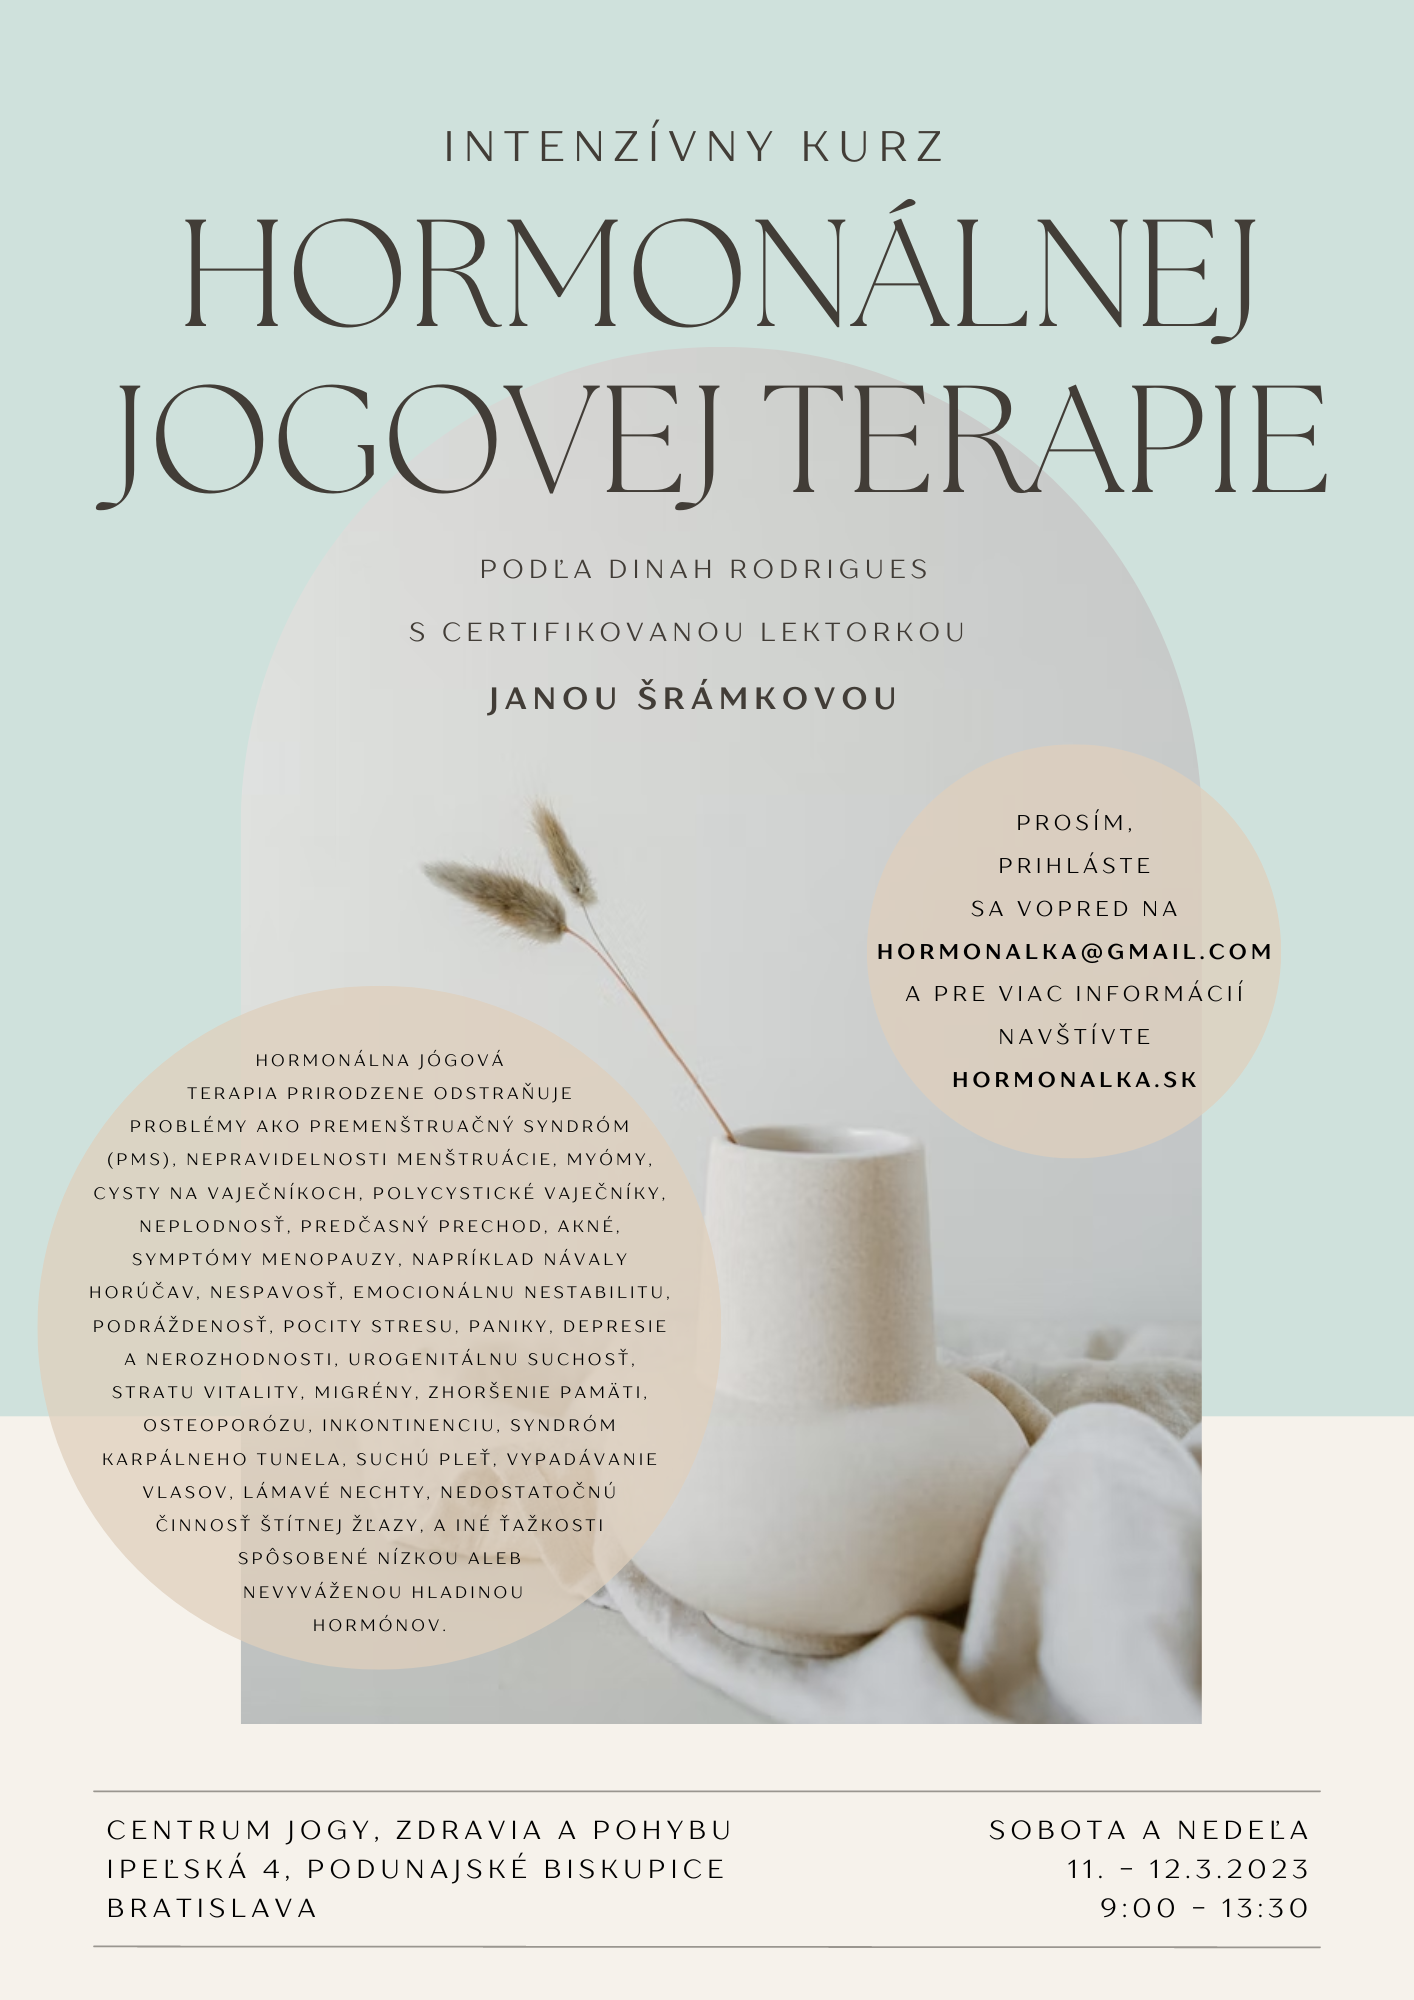 Hormonalna-jogova-terapia-hormonalna-joga-kurz-Bratislava-marec2023-jana-sramkova-dinah-rodrigues